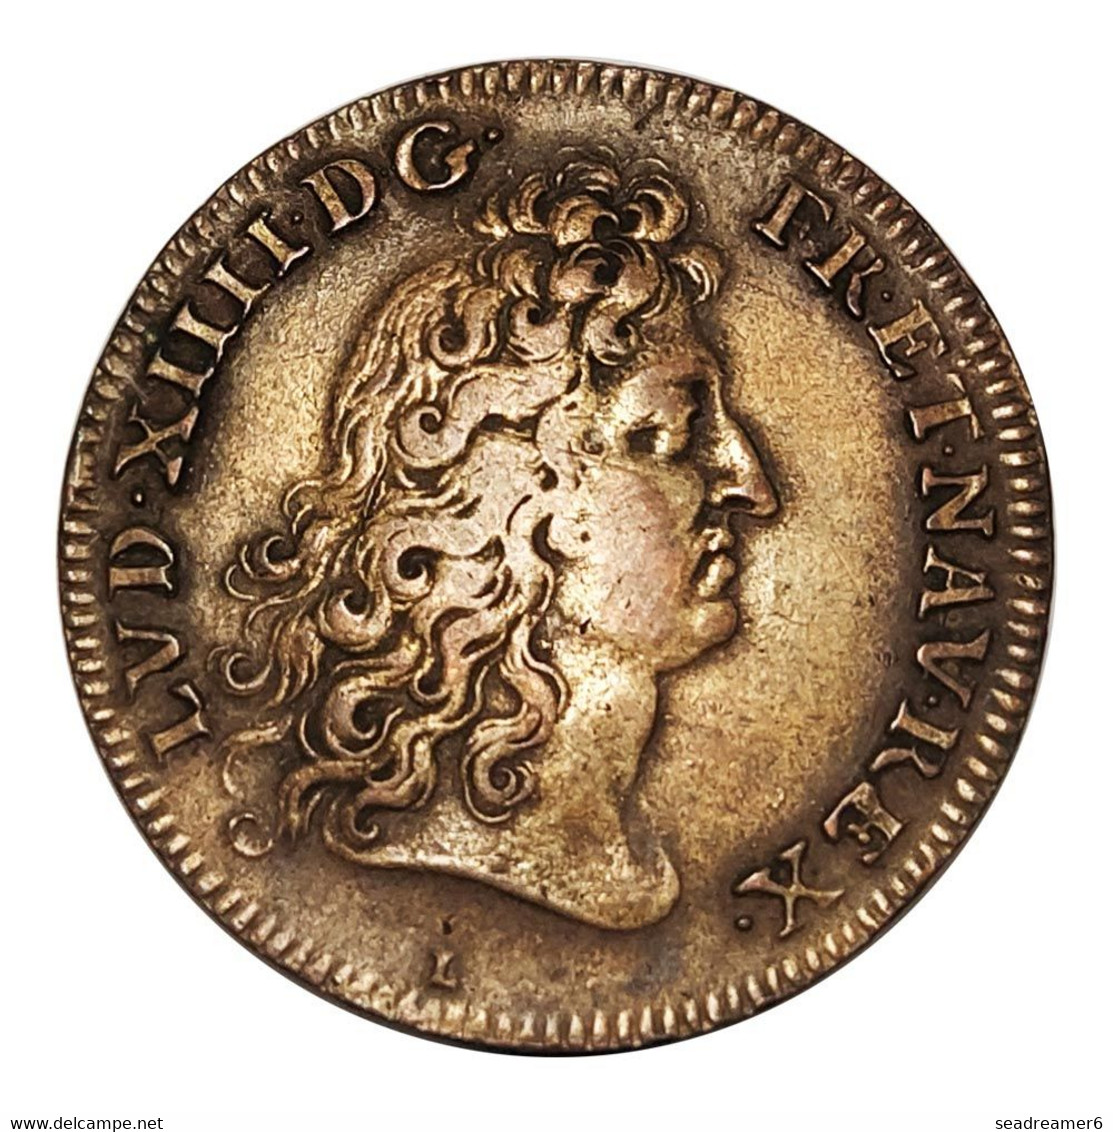 Jeton Royal - Louis XIV Porc-Epic - Telorvm Aeterna Seges - Trésor Royal 1678 - Adel